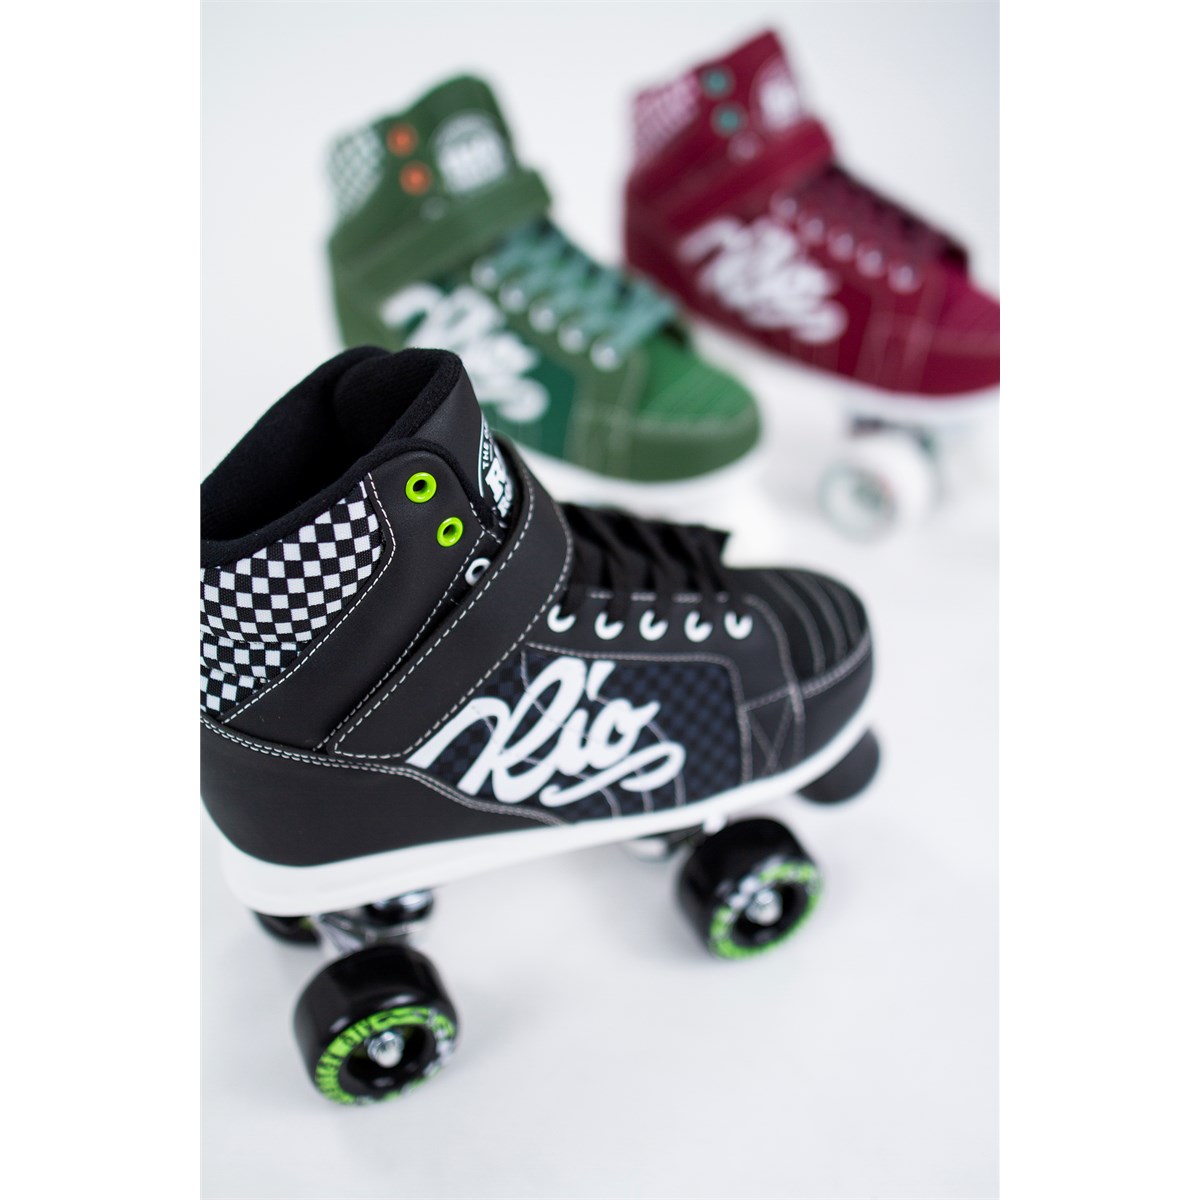 Green Details about   Rio Roller Skates Coaster Quad Skate Wheels 